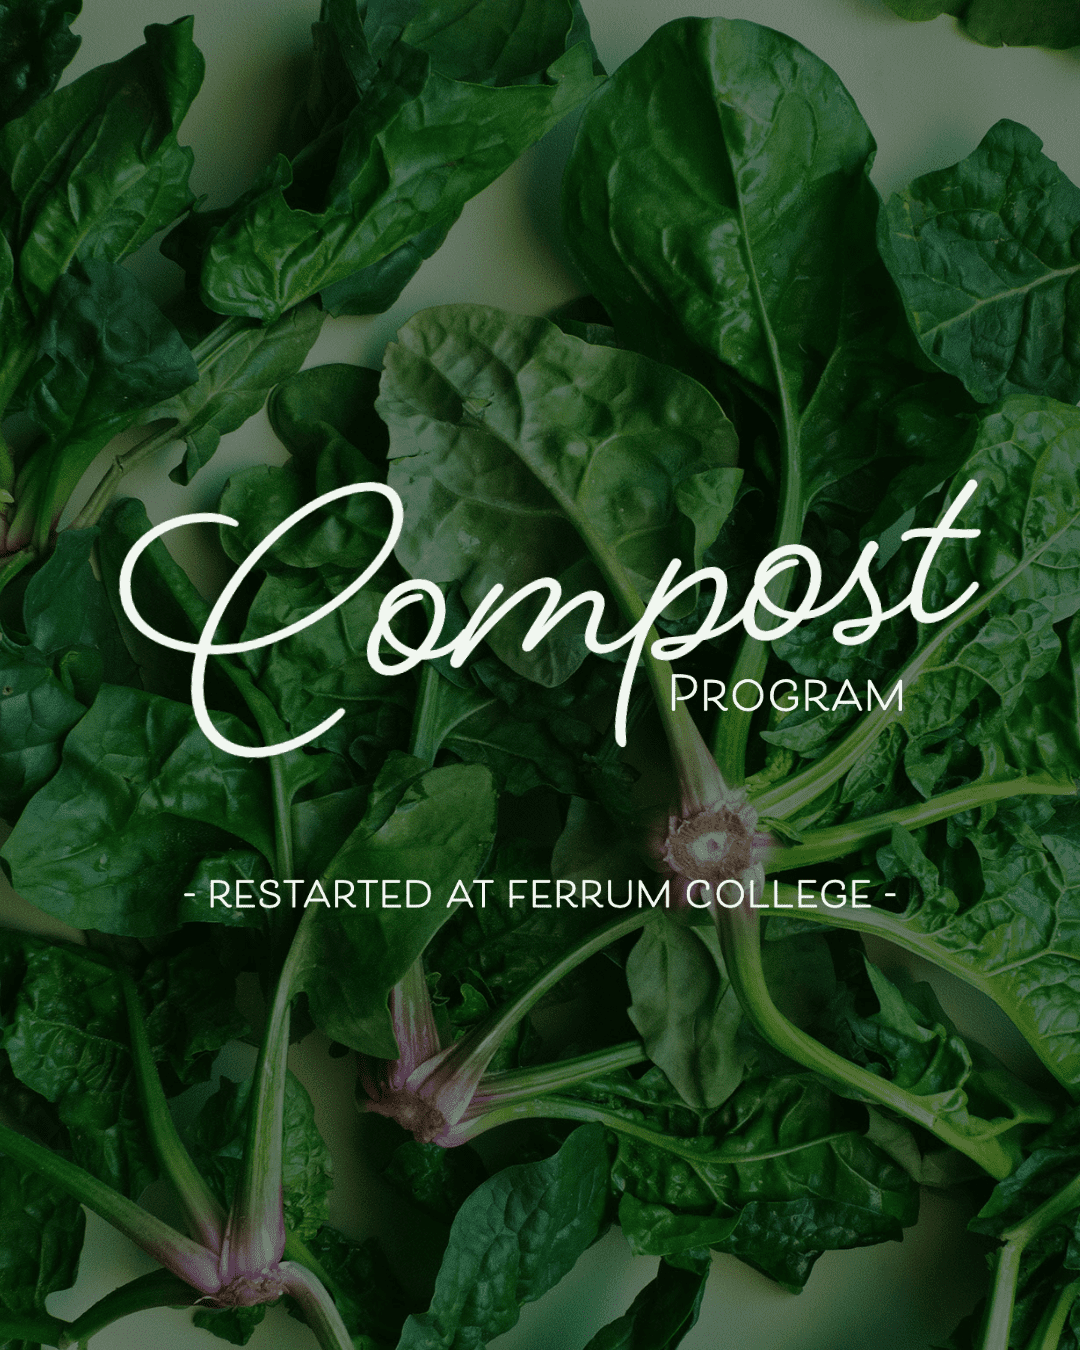 Compost program restarted at Ferrum College